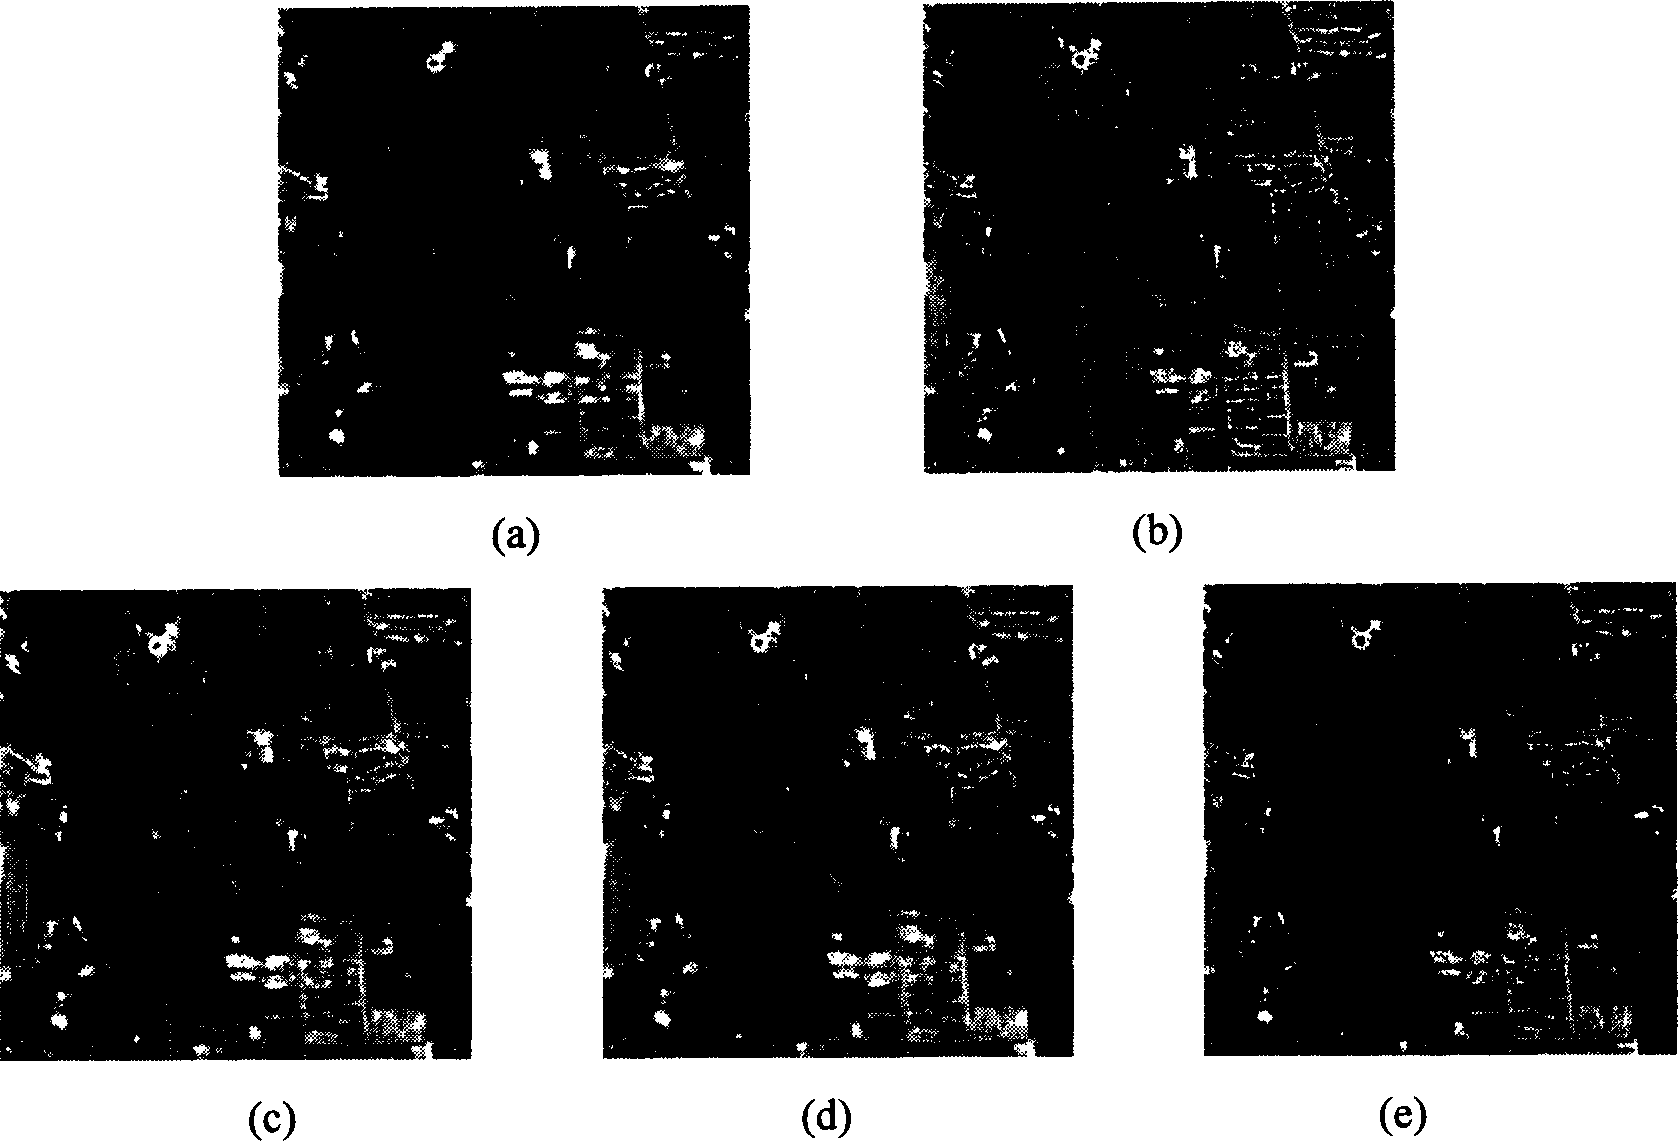 Remote-senstive image interfusion method based on image local spectrum characteristic